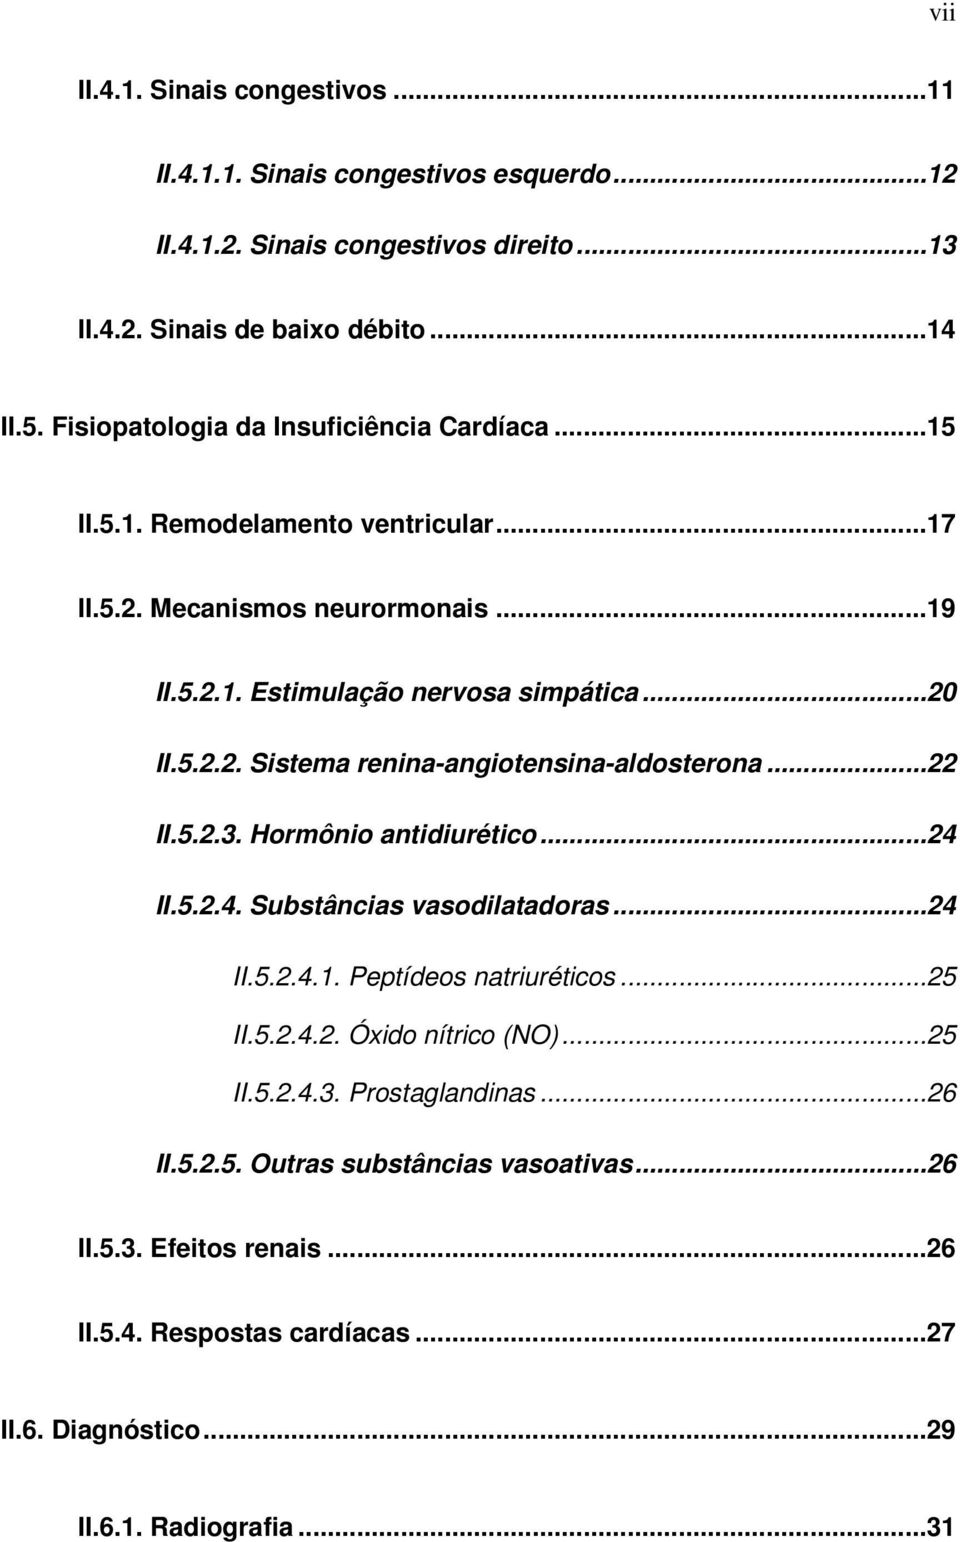 ..22 II.5.2.3. Hormônio antidiurético...24 II.5.2.4. Substâncias vasodilatadoras...24 II.5.2.4.1. Peptídeos natriuréticos...25 II.5.2.4.2. Óxido nítrico (NO)...25 II.5.2.4.3. Prostaglandinas.